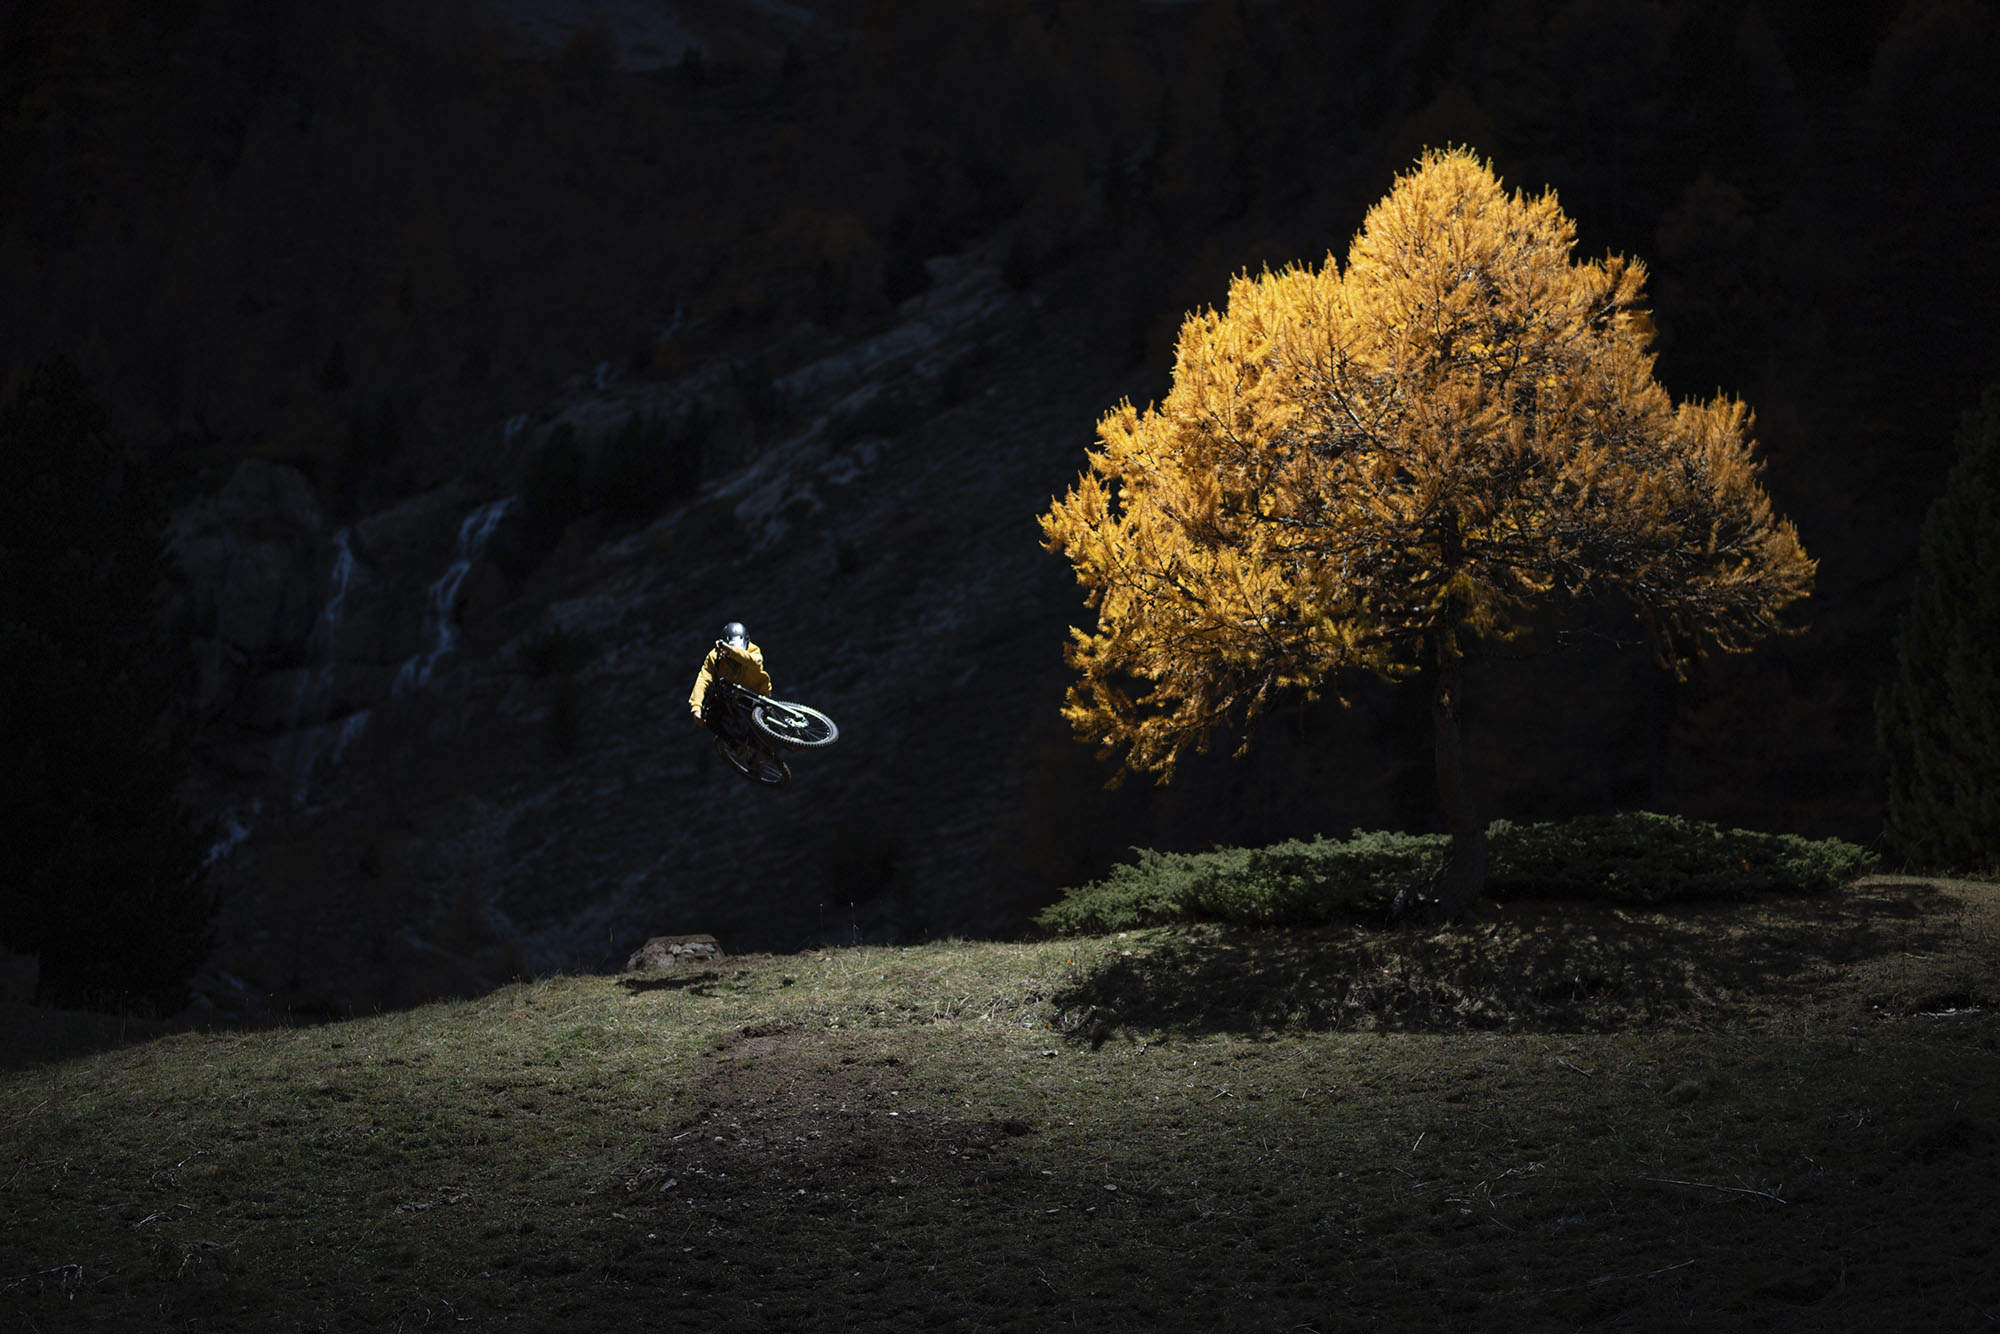 ciclista in salto vicino a un albero